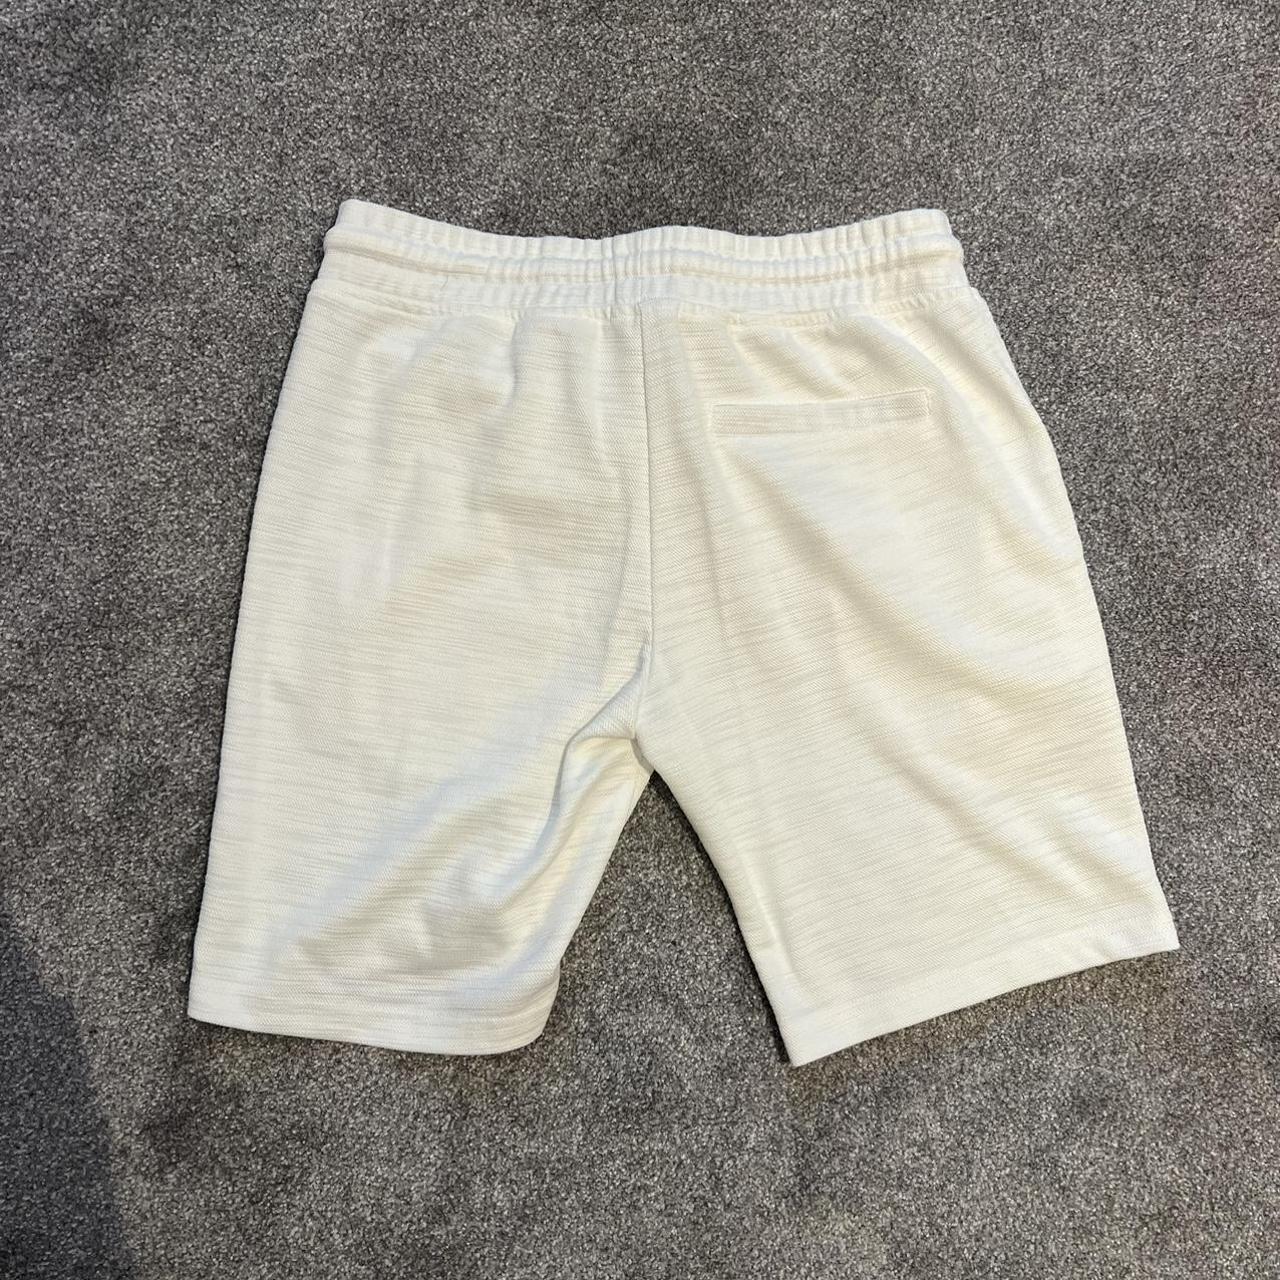 Arne Cavour shorts in White size Medium. Never... - Depop